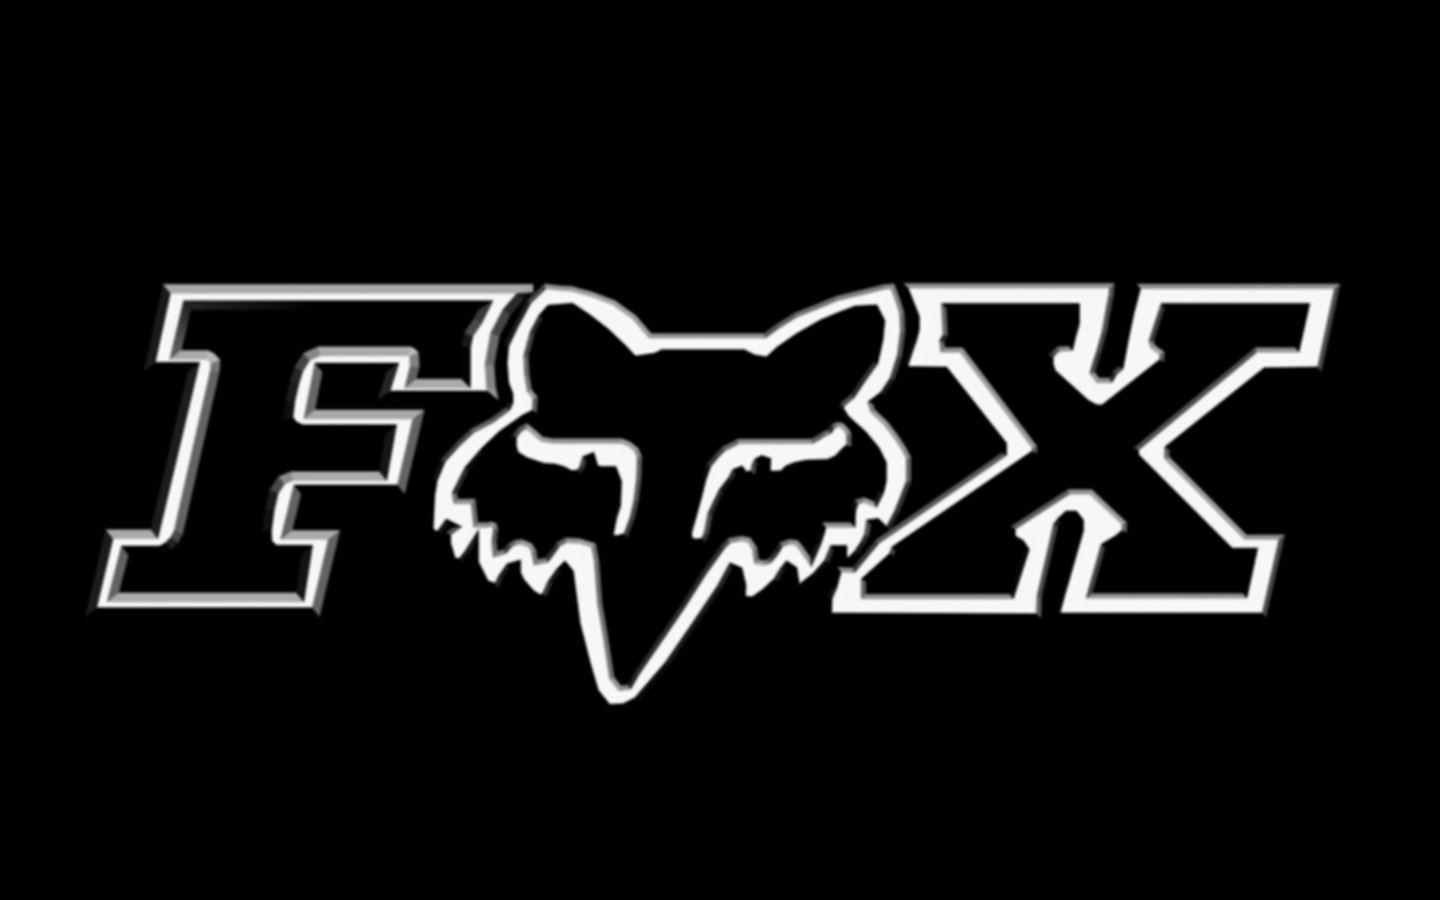 Cool Race Logo - Cool Fox Racing Wallpapers - Wallpaper Cave